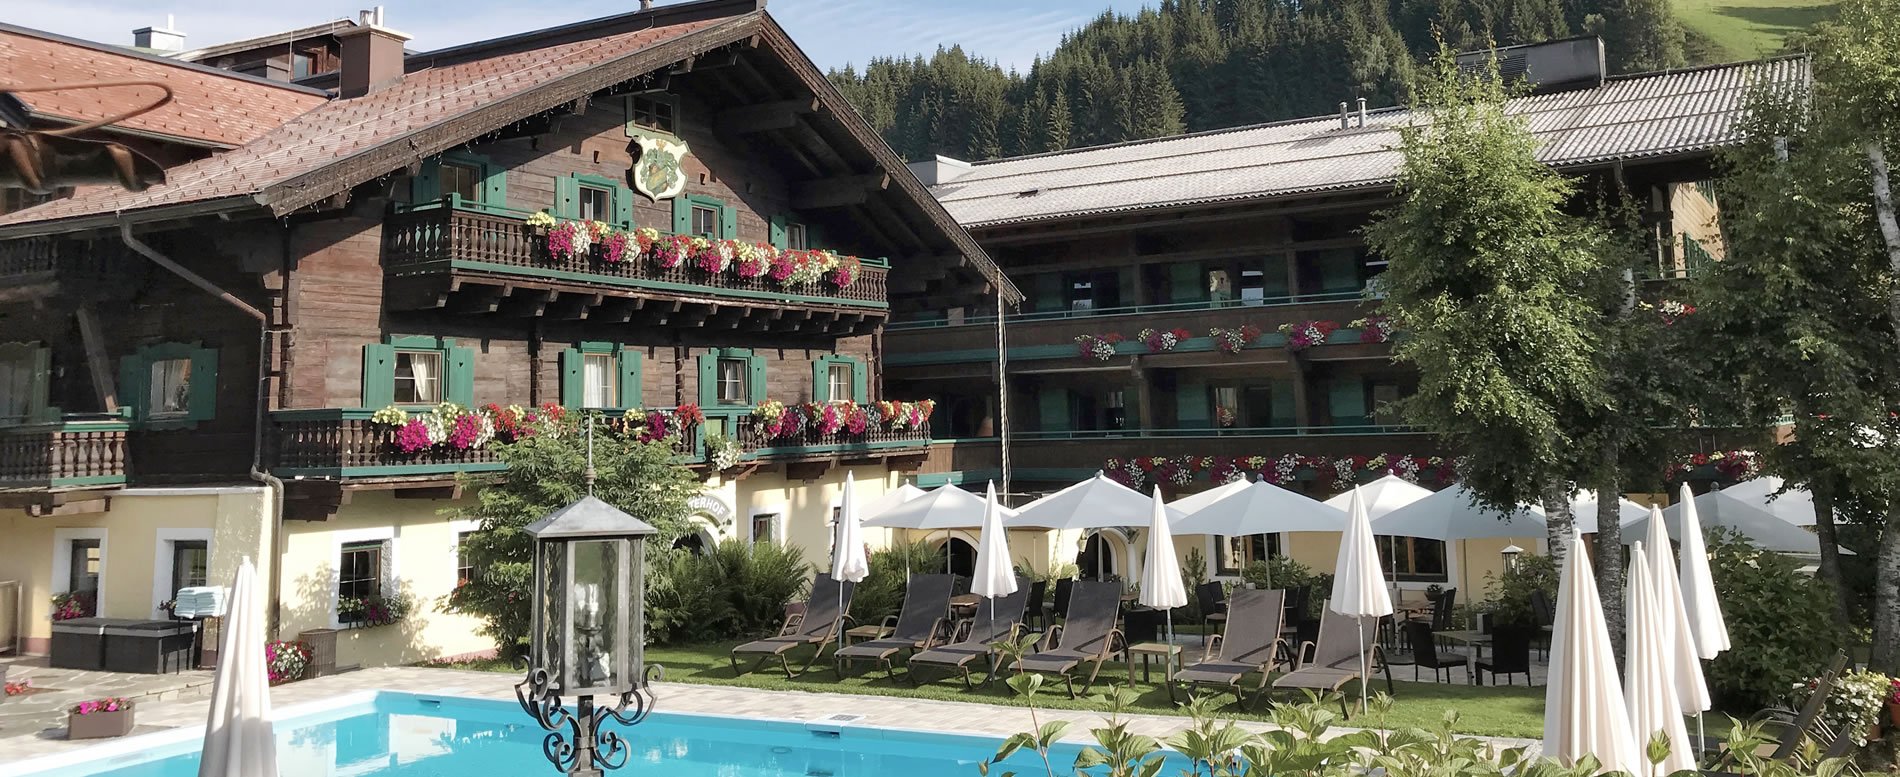 4-Sterne Hotel Unterhof in Filzmoos mit Pool